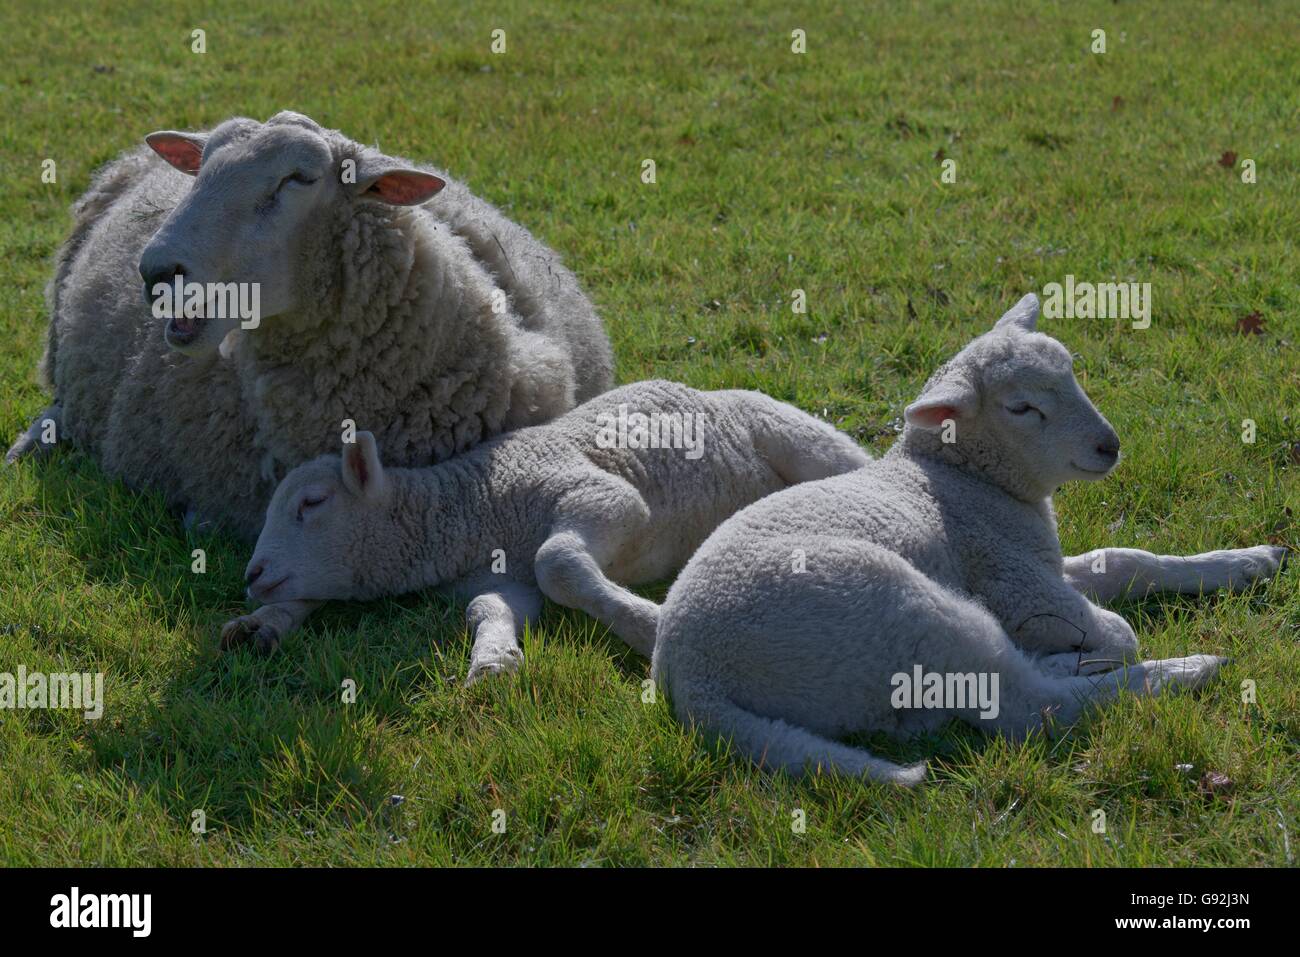 Texel Sheep, Lower Rhine, North Rhine-Westphalia, Germany Stock Photo